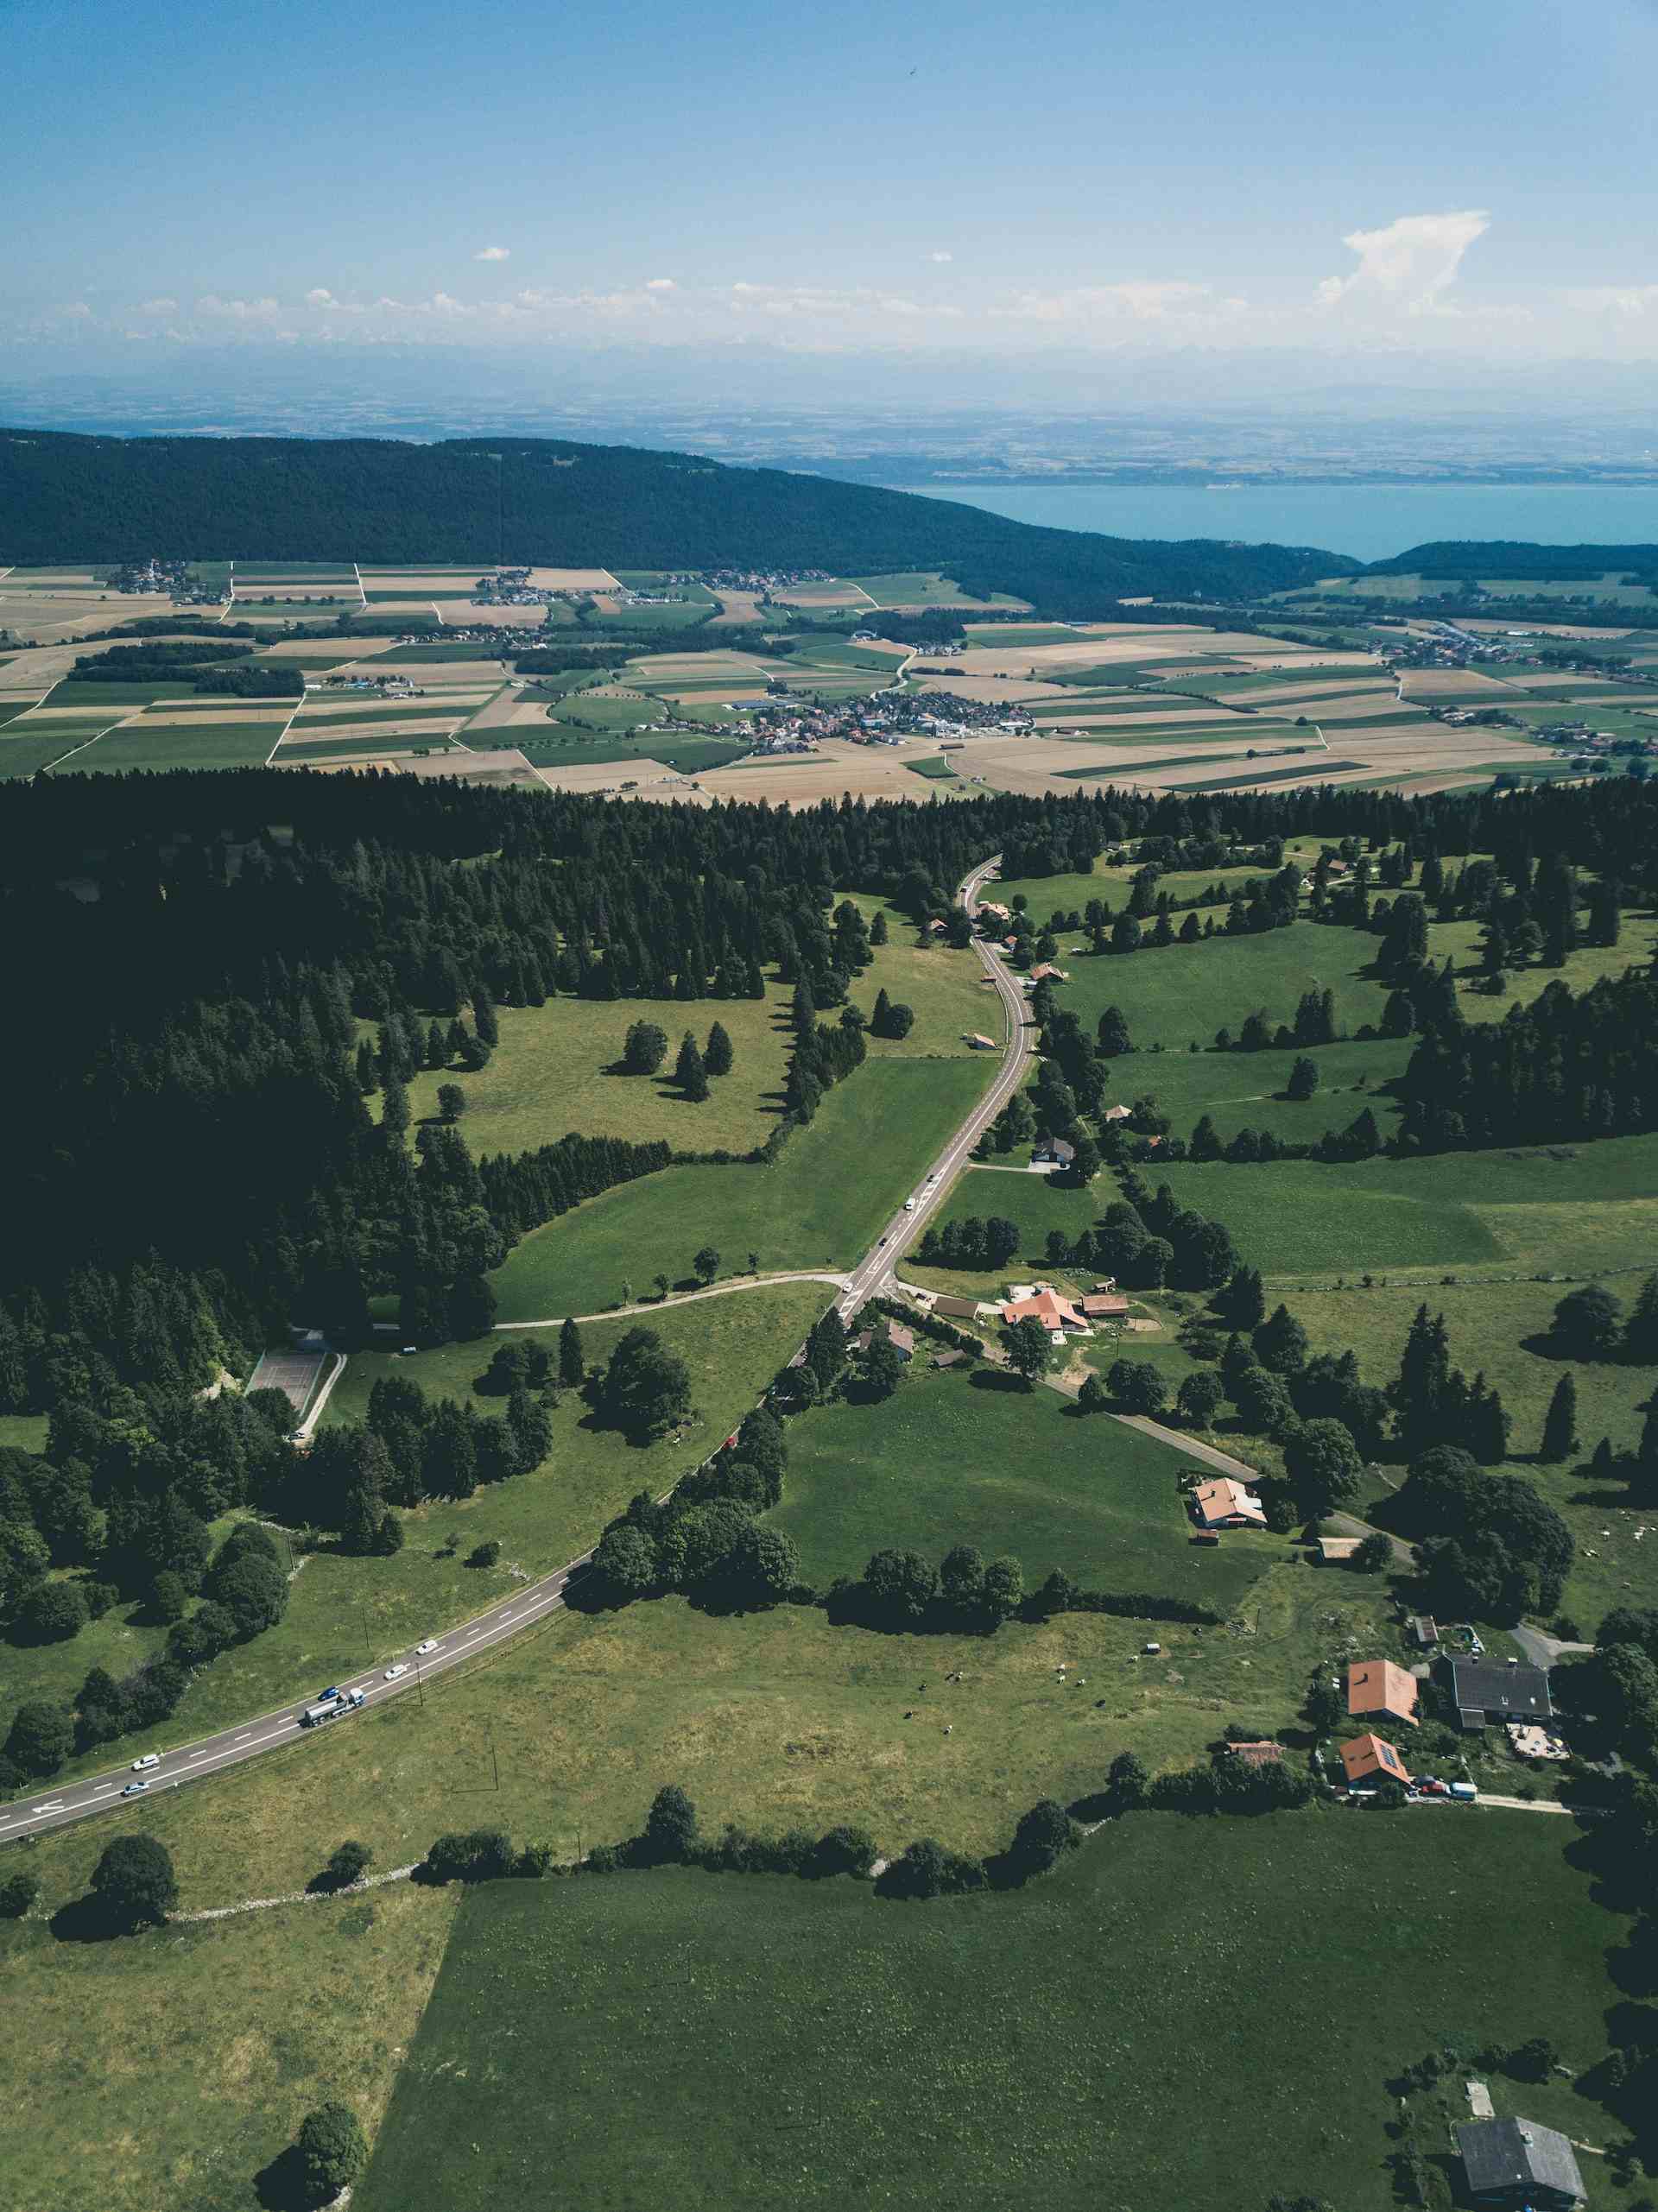 Domaine de Bel-Air, producer in Le Landeron canton of Neuchâtel in Switzerland